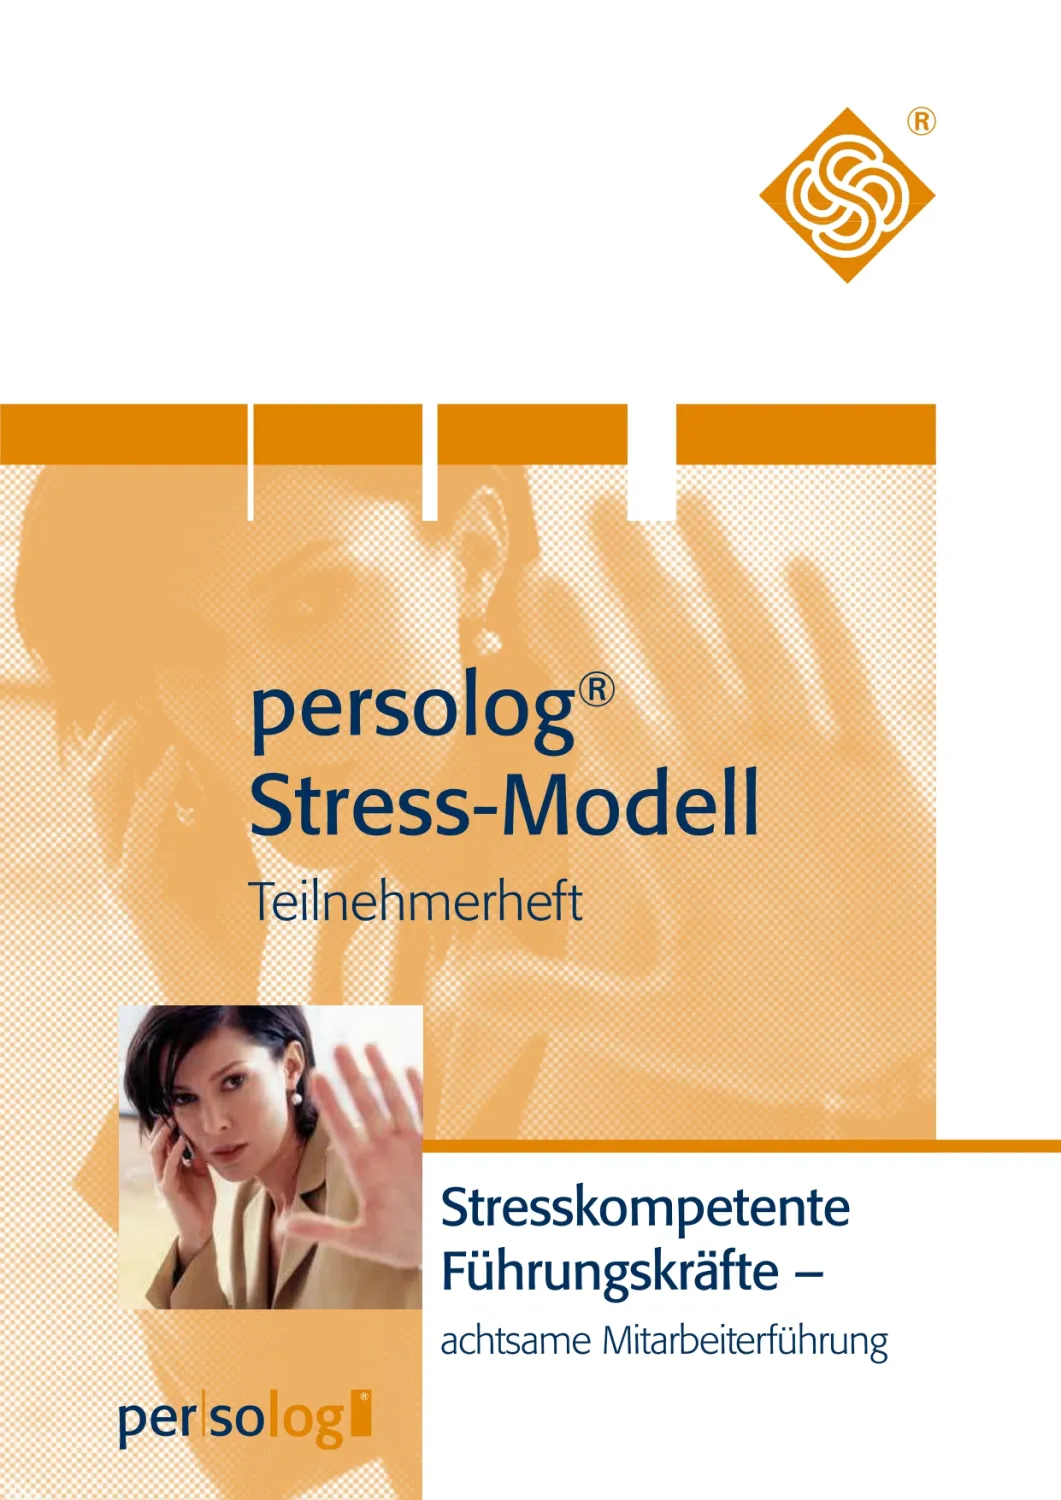 persolog Stress-Modell Teilnehmerheft